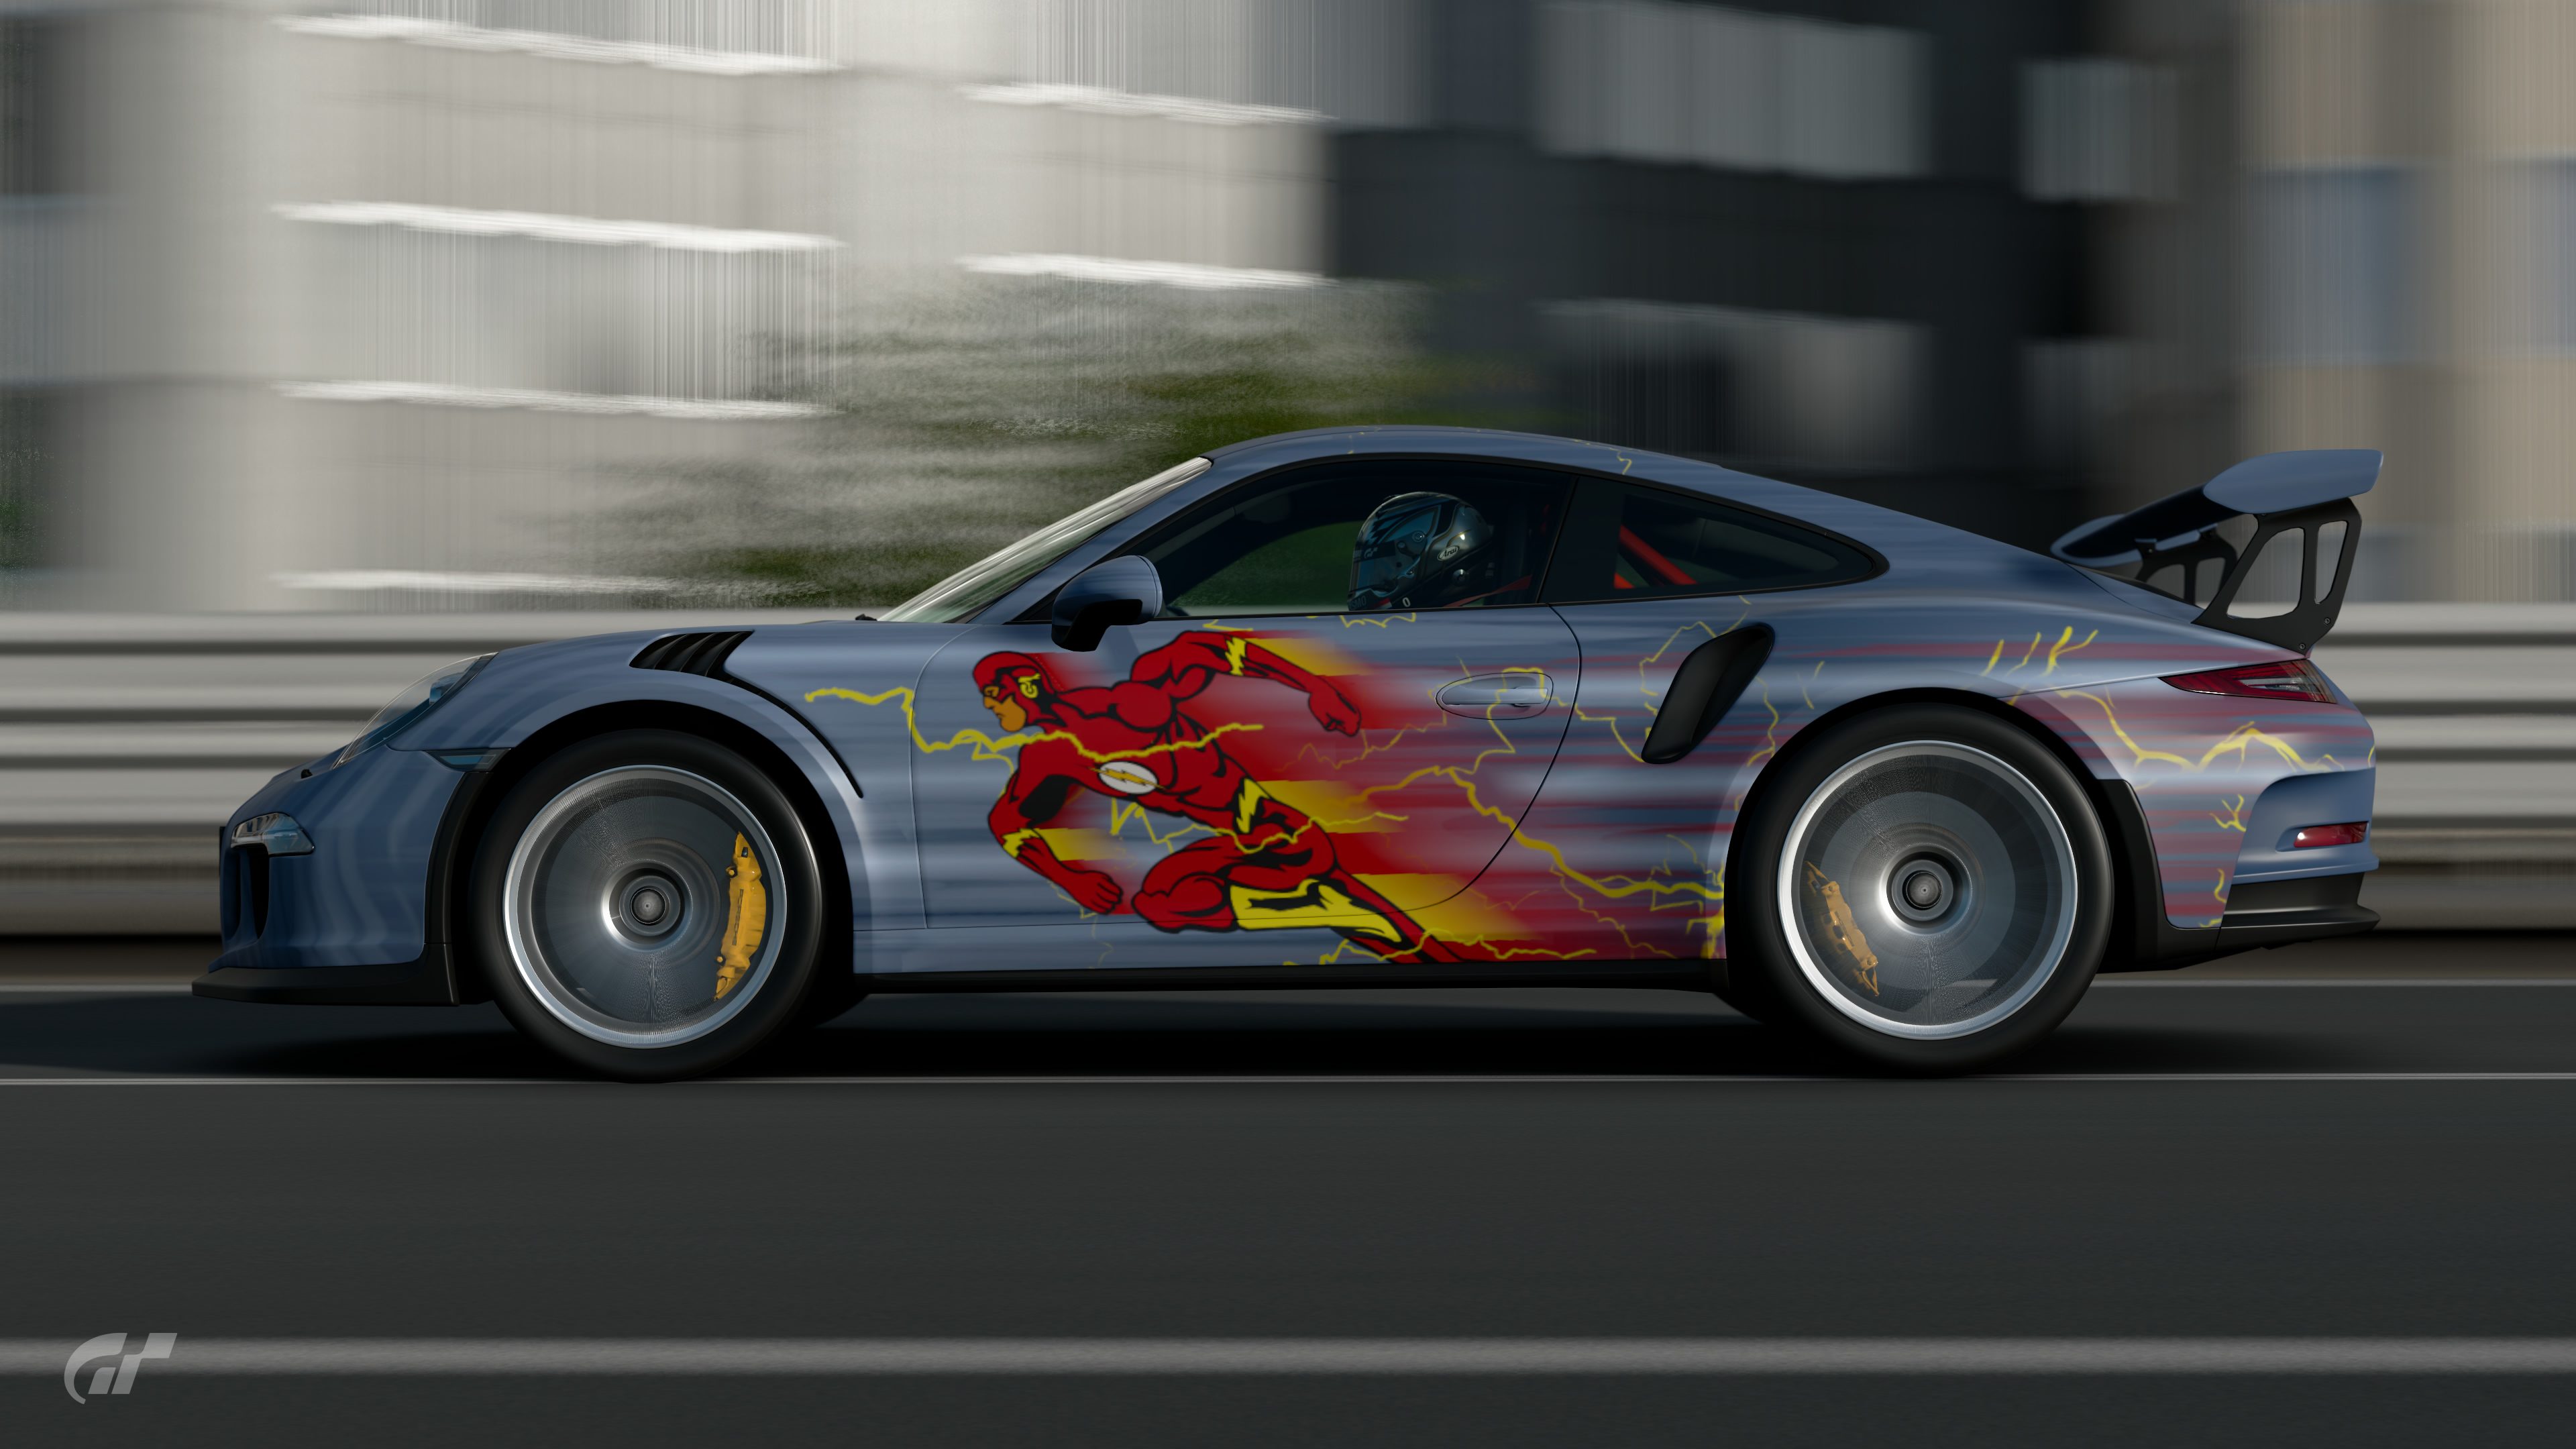 Porsche 911 gt3 RS "The Flash" side